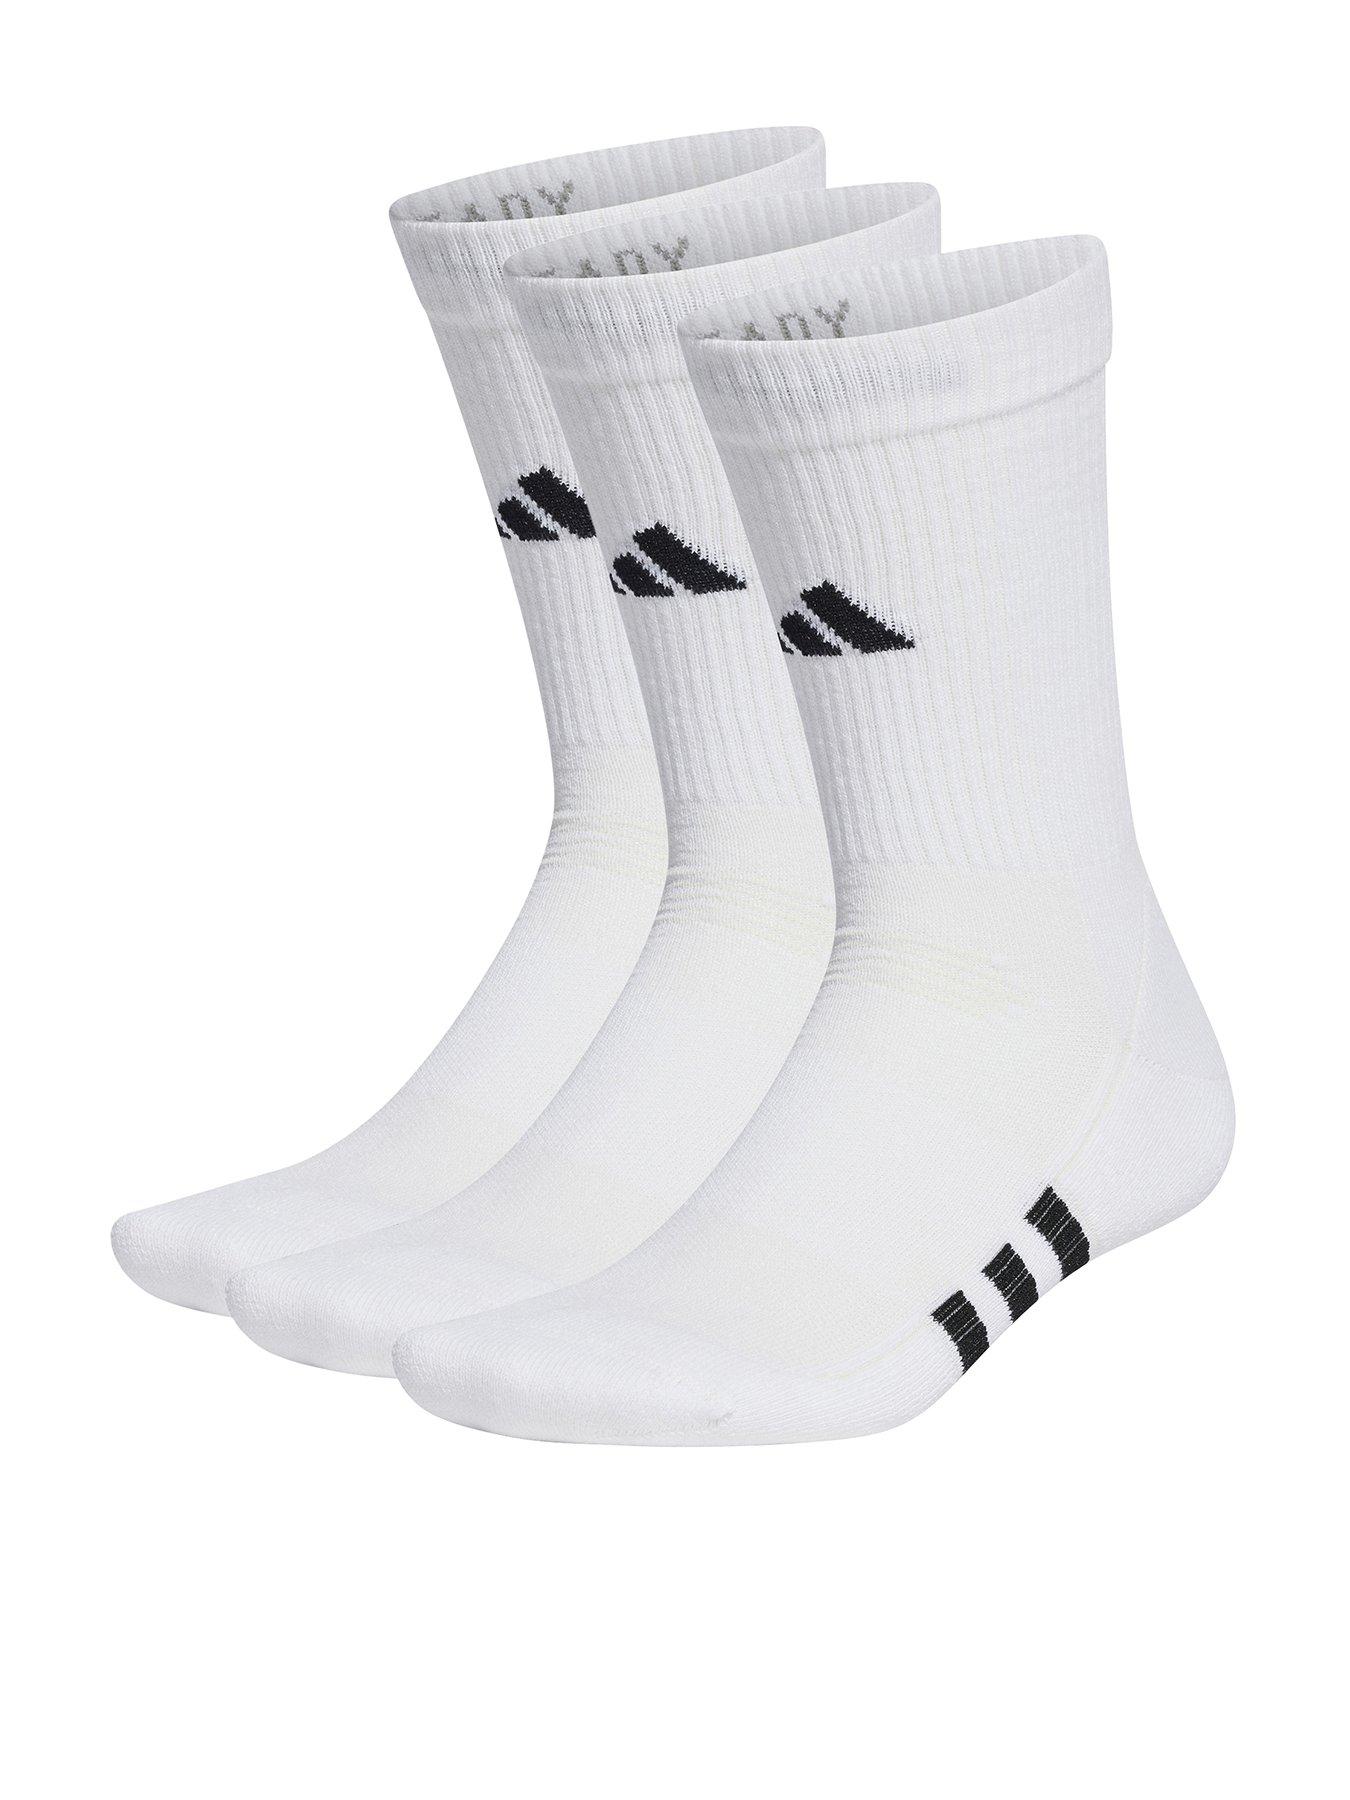 adidas Mens Training Cushioned Crew 3pack Socks - White, White, Size M, Men